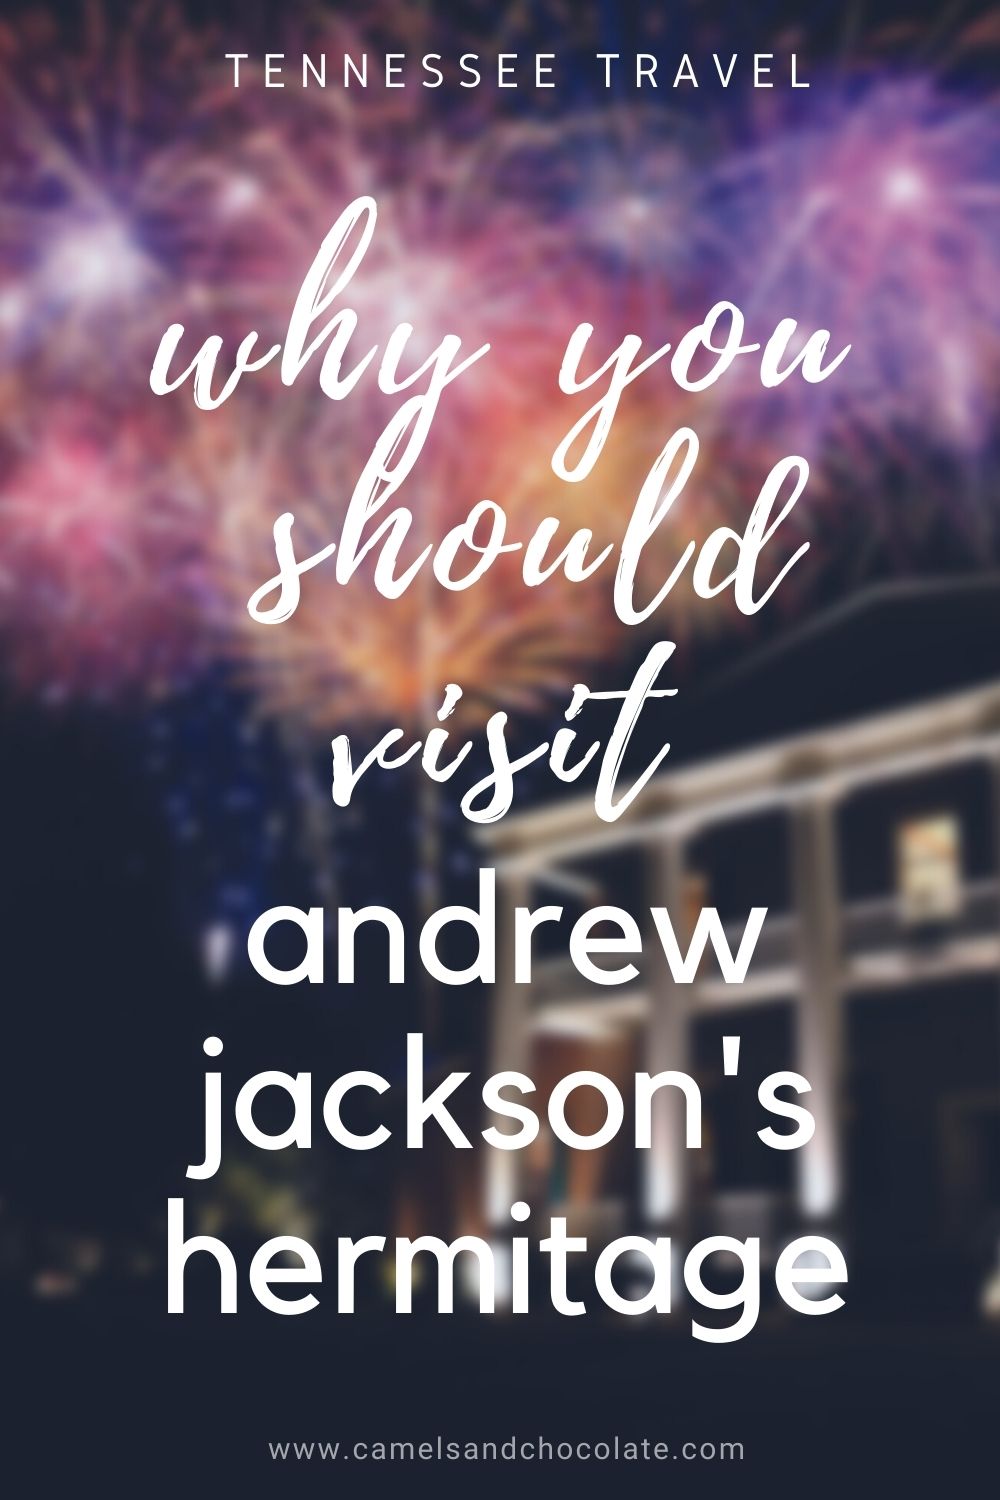 Visit Andrew Jackson's Hermitage in Nashville